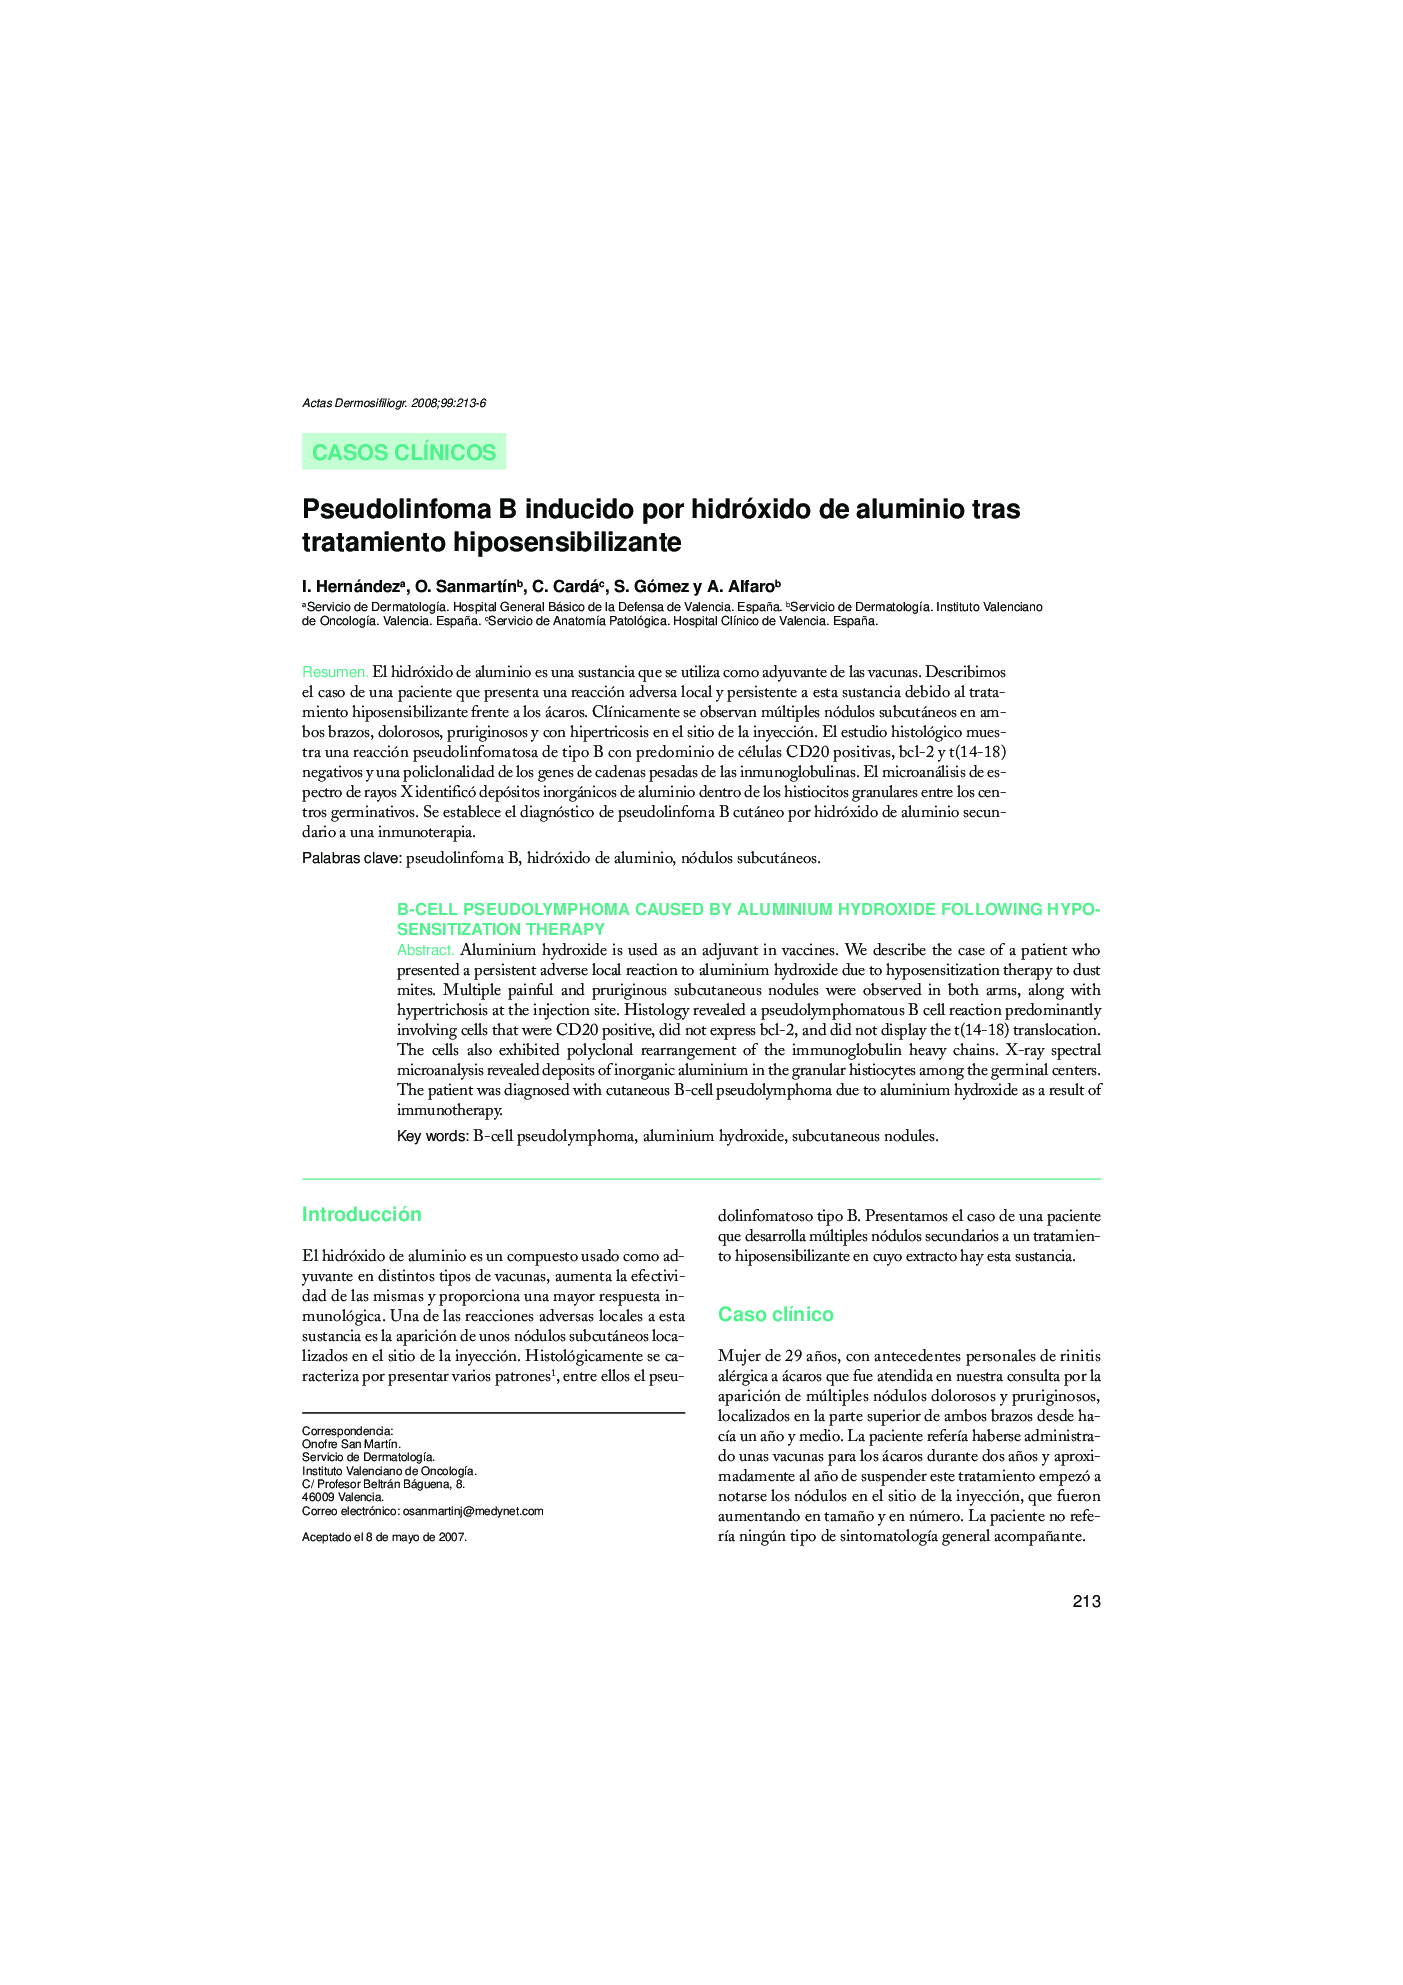 Pseudolinfoma B inducido por hidróxido de aluminio tras tratamiento hiposensibilizante